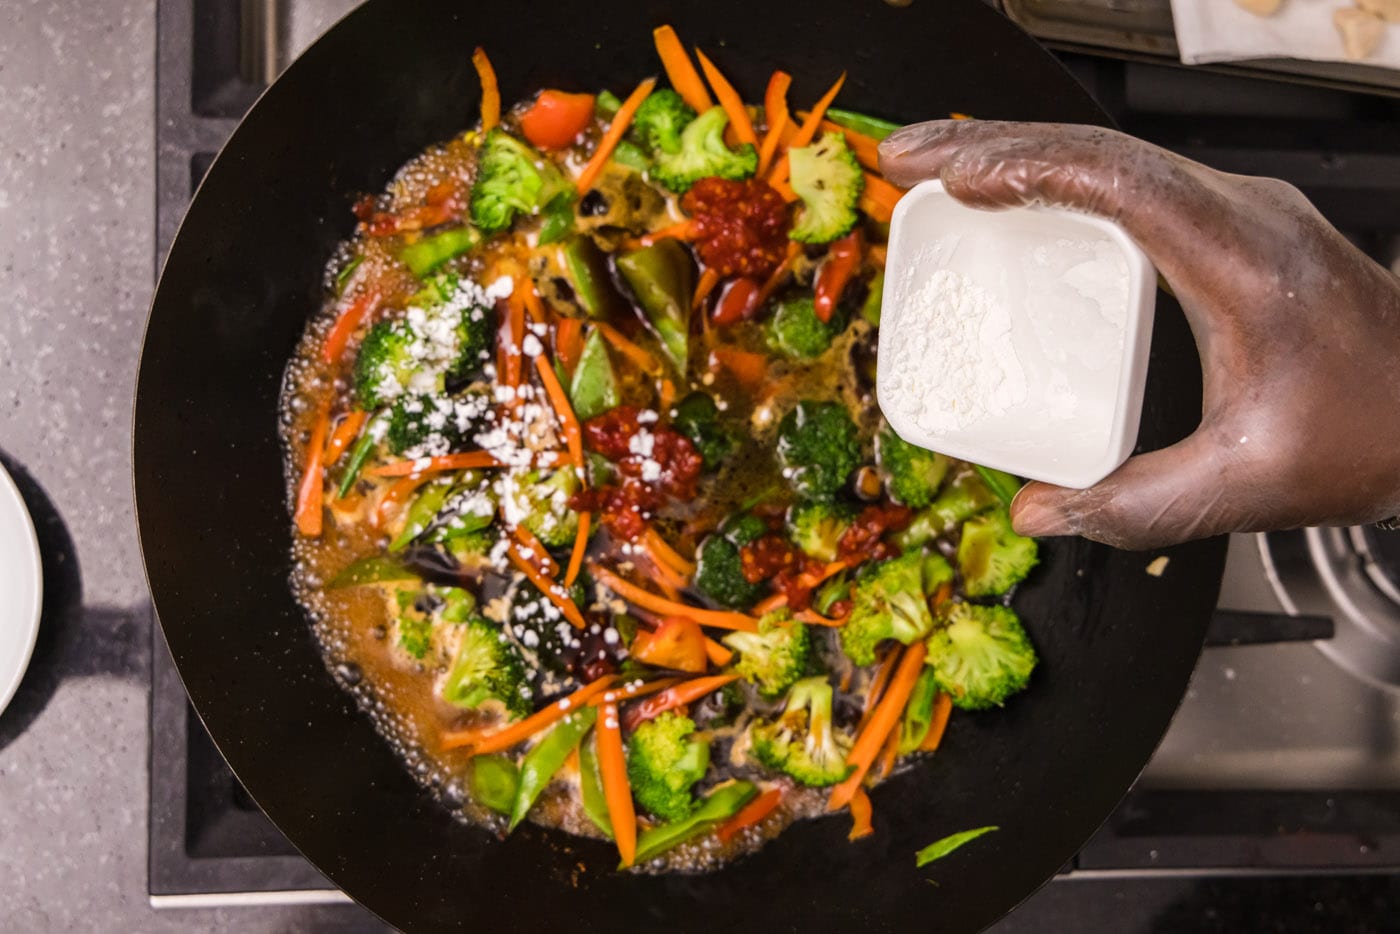 sprinkling cornstarch over veggies in a wok